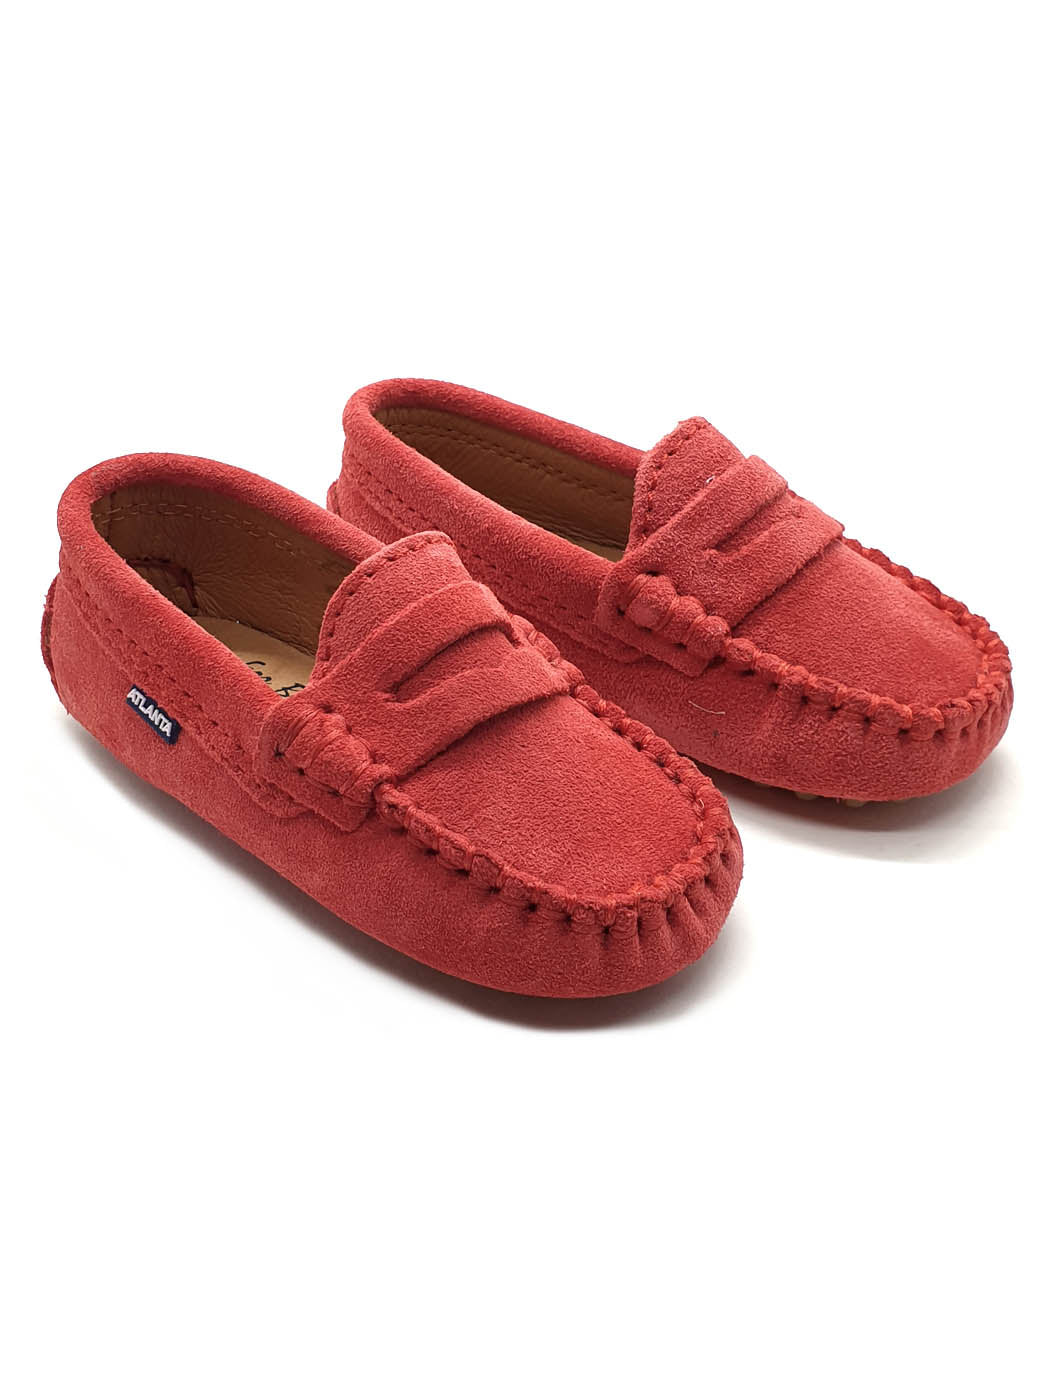 Atlanta Mocassin- Baby Shoes Moccasins Red-002G022